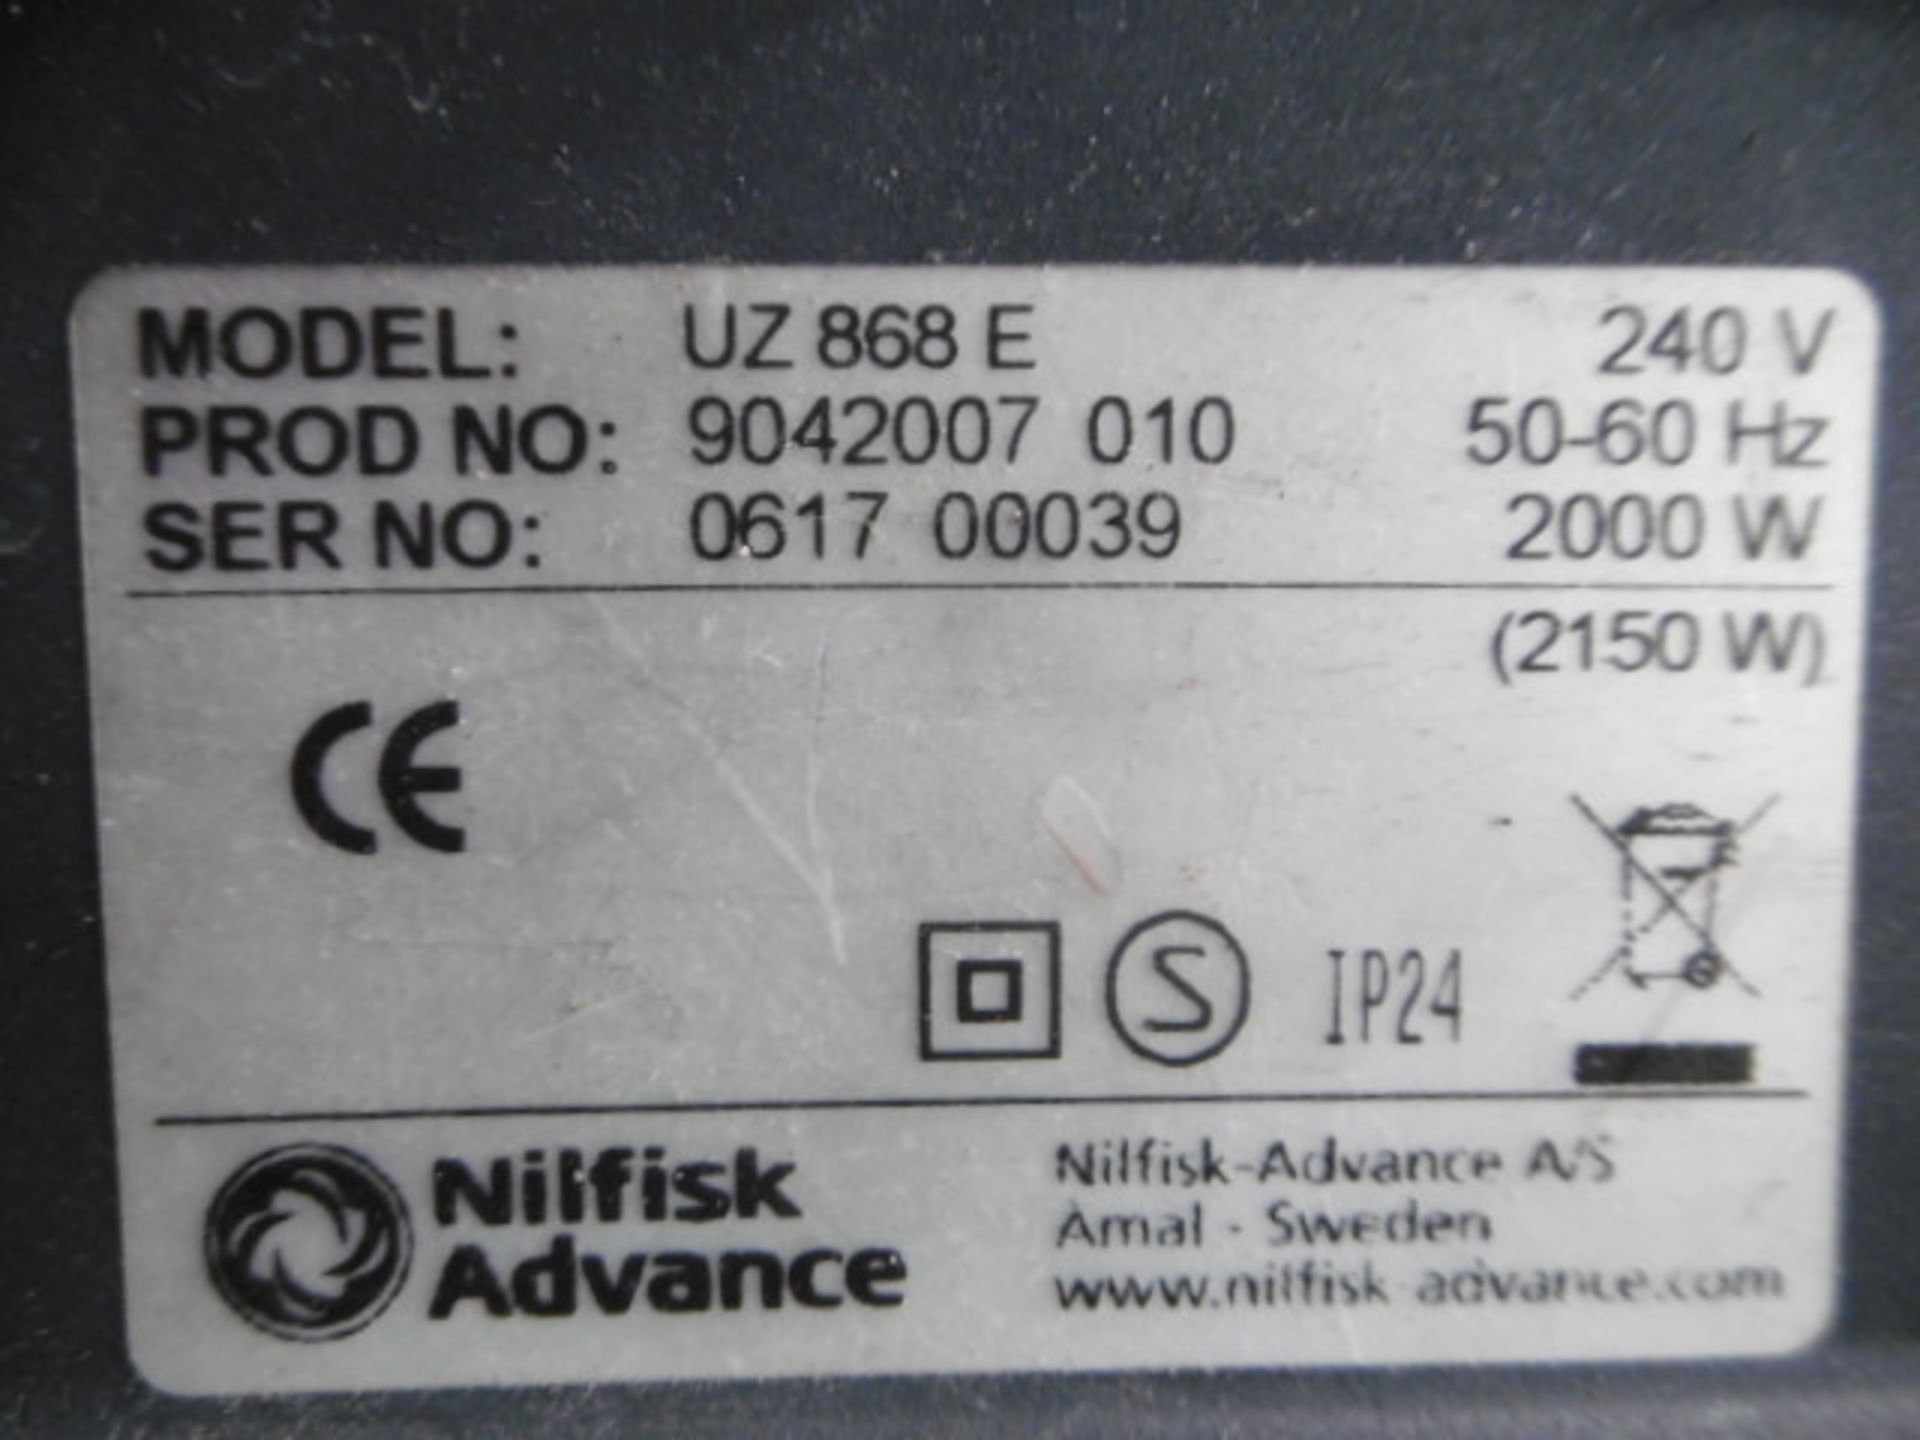 Nilfisk-Advance UZ 868 E HD Vacuum Cleaner - Bild 6 aus 6